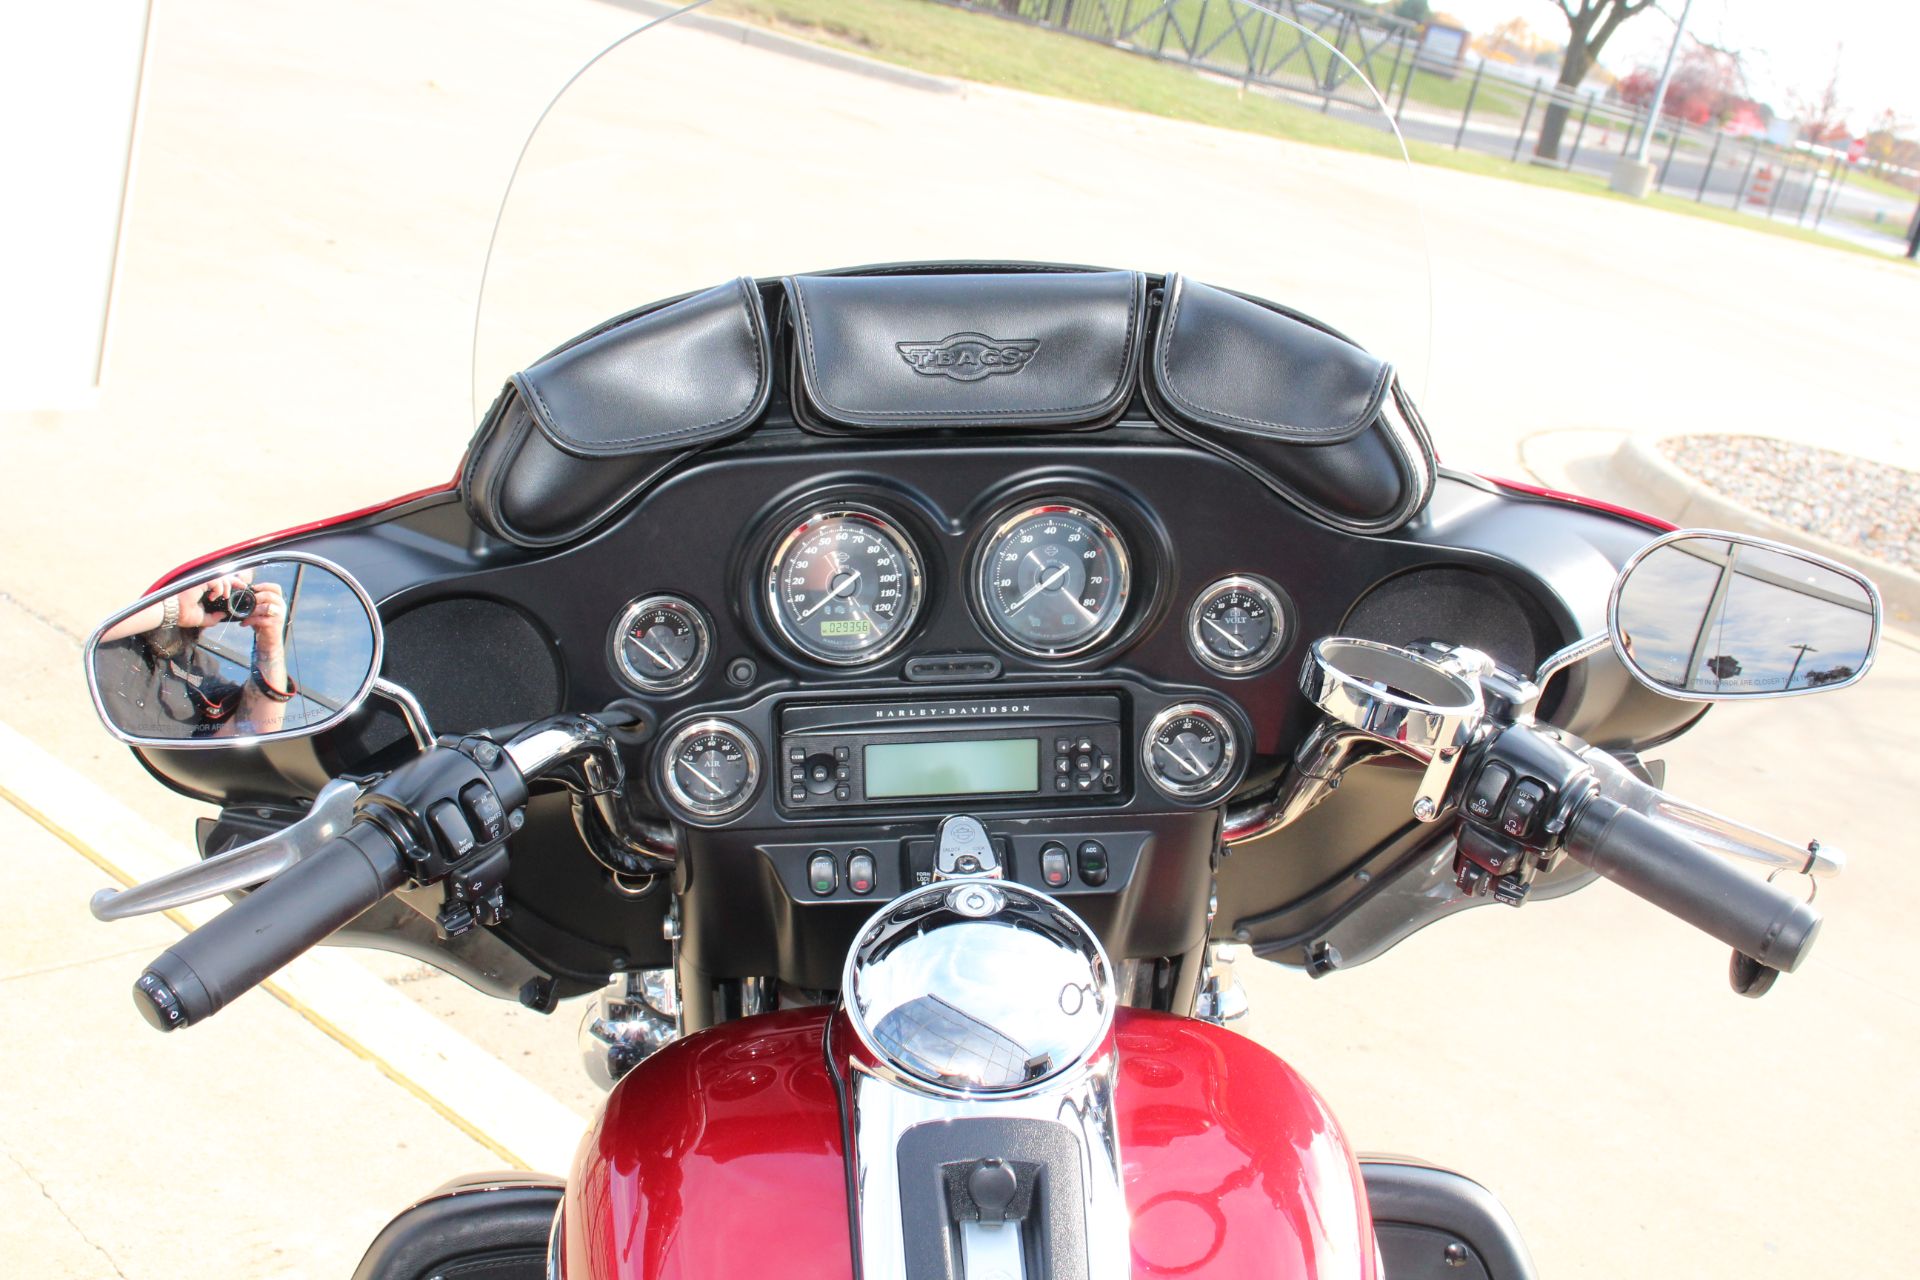 2013 Harley-Davidson Electra Glide® Ultra Limited in Flint, Michigan - Photo 9